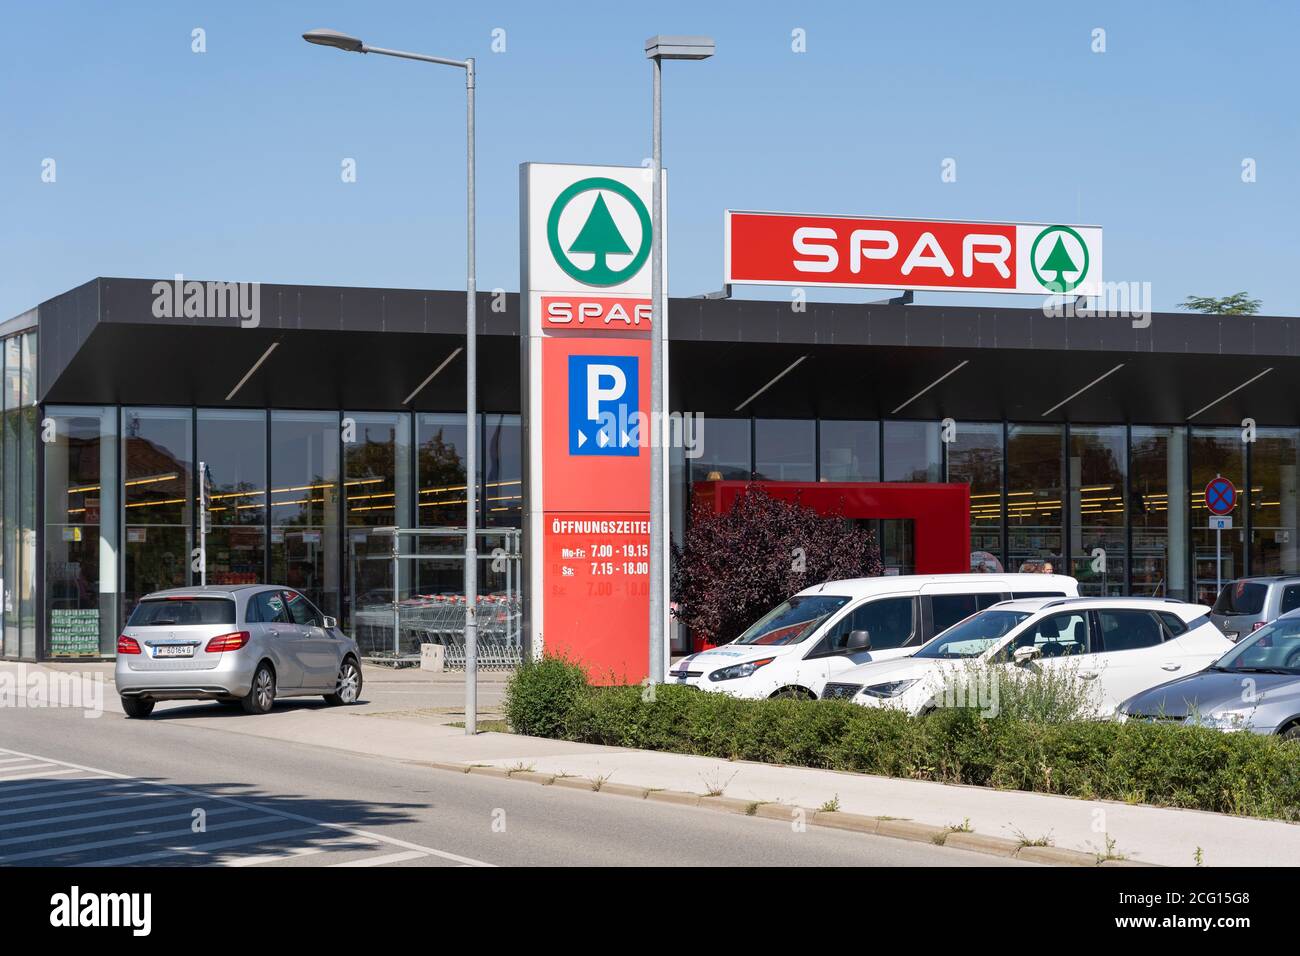 A Spar supermarket with a large sign and logo, Langenlois, Austria. Spar is a Dutch multinational franchise that manages food retail stores Stock Photo